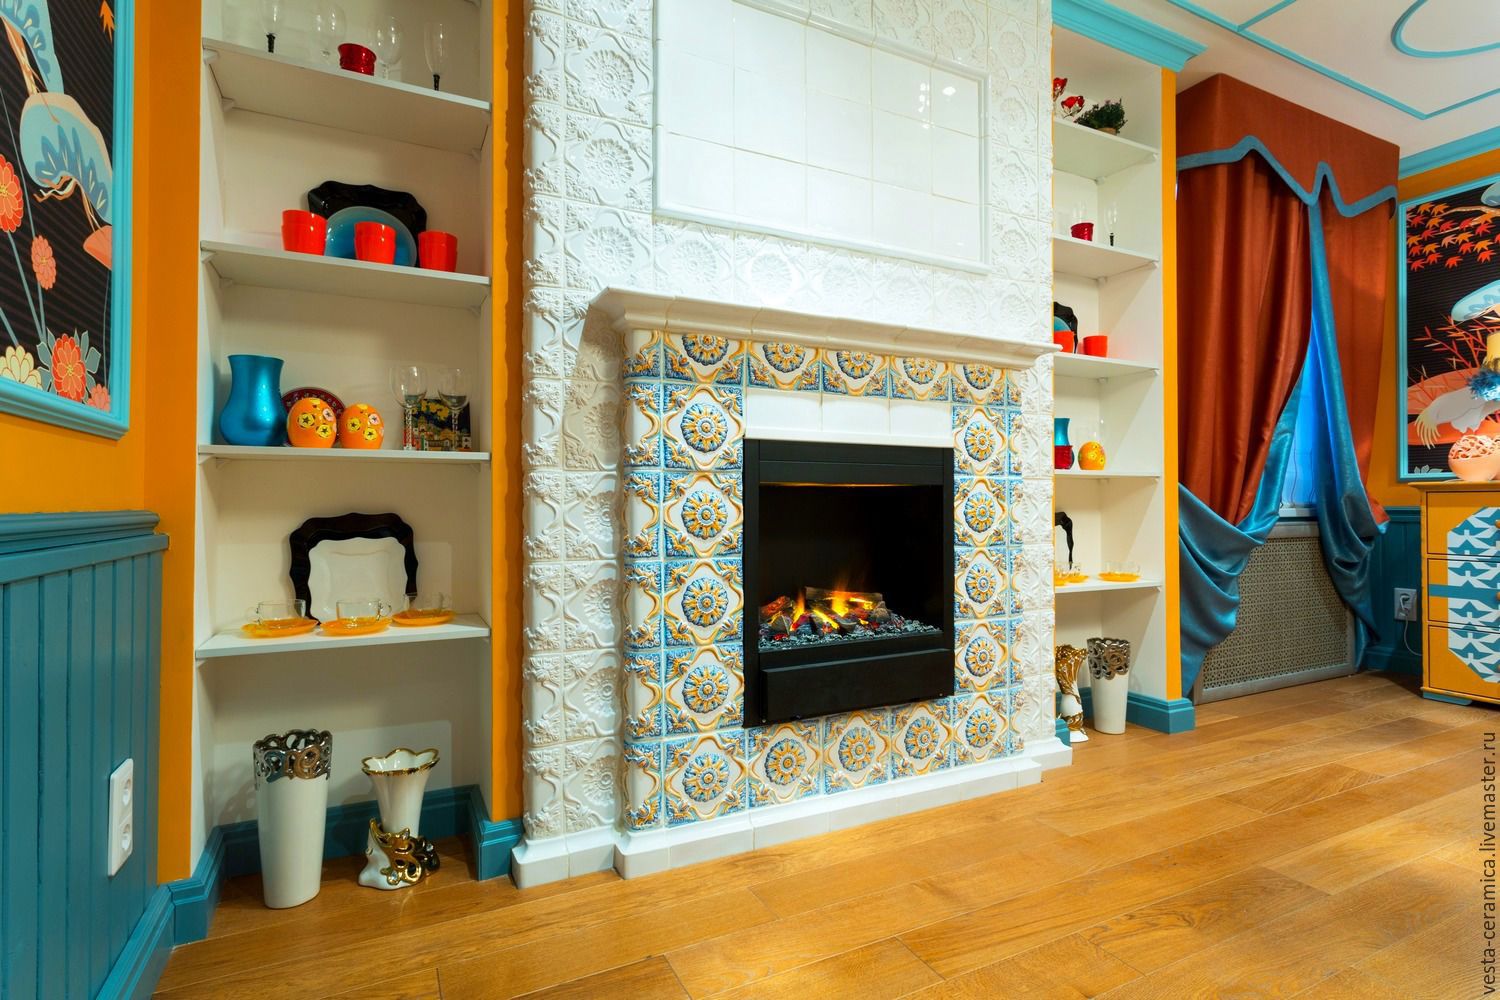 Porcelain Tile Fireplace Inspirational Tiled Fireplace